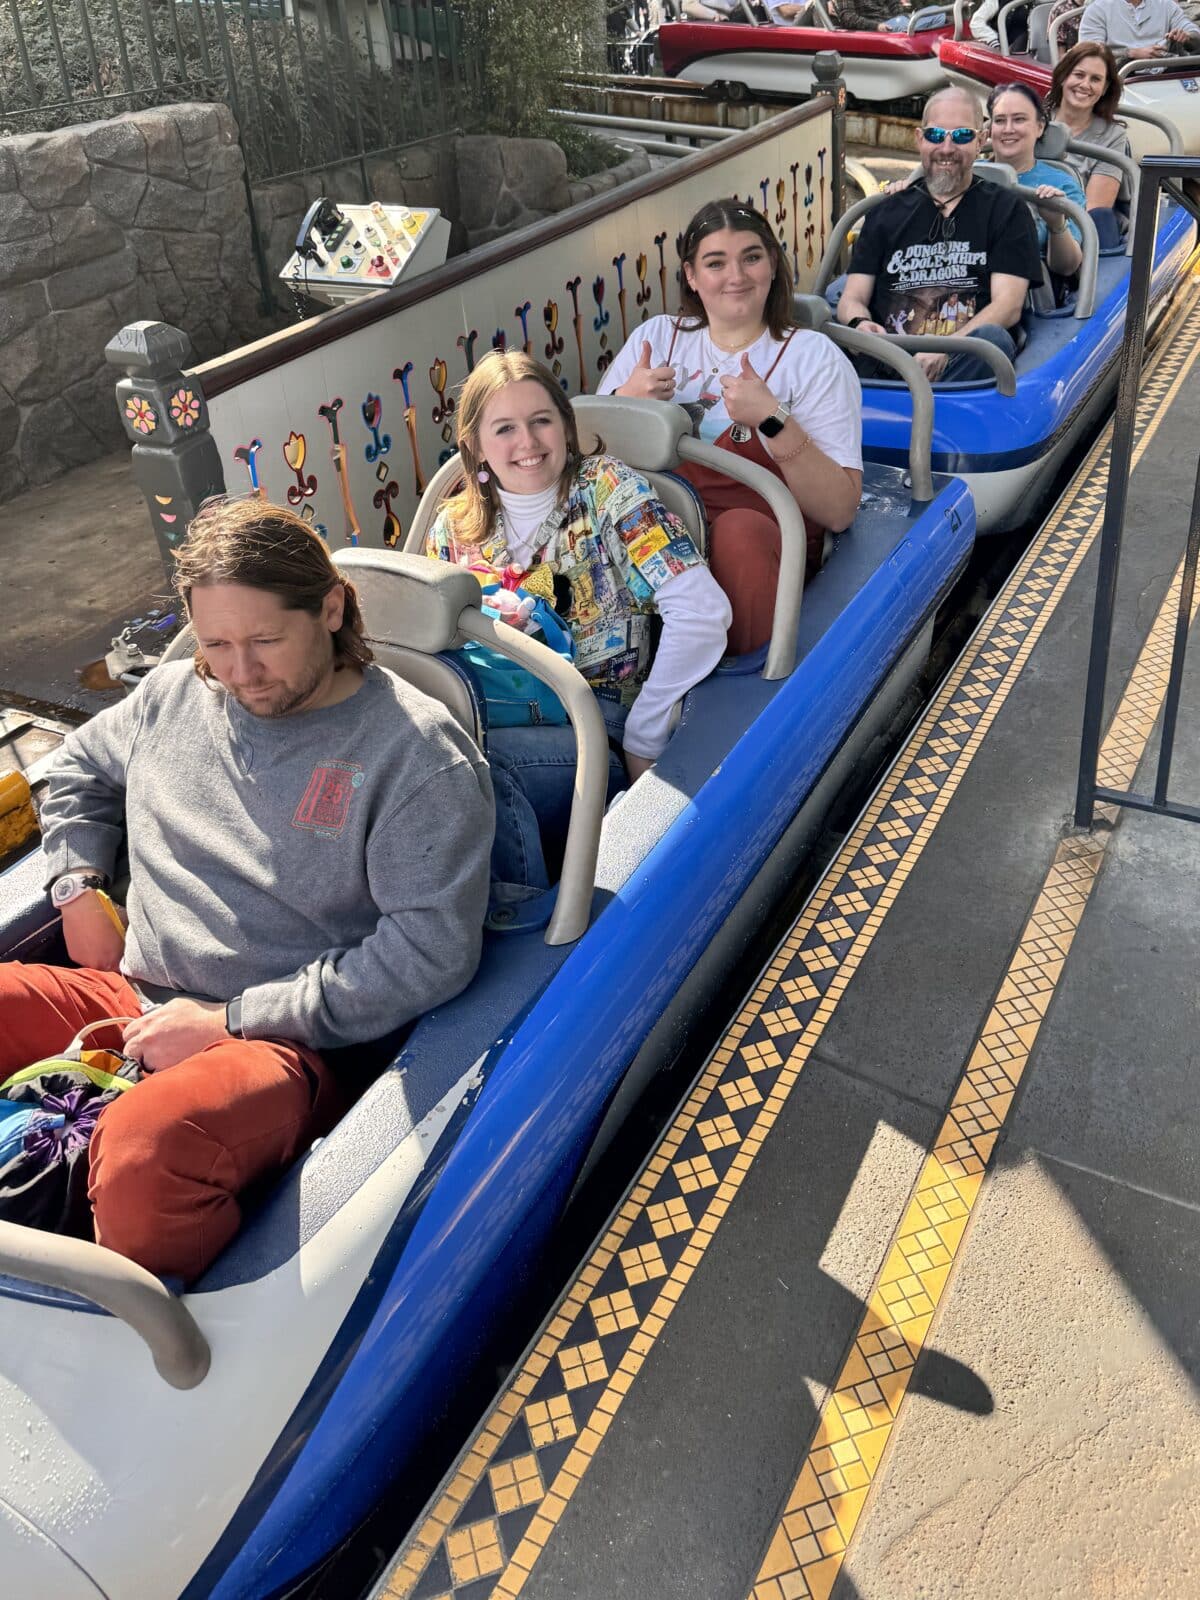 Our family riding Matterhorn at Disneyland